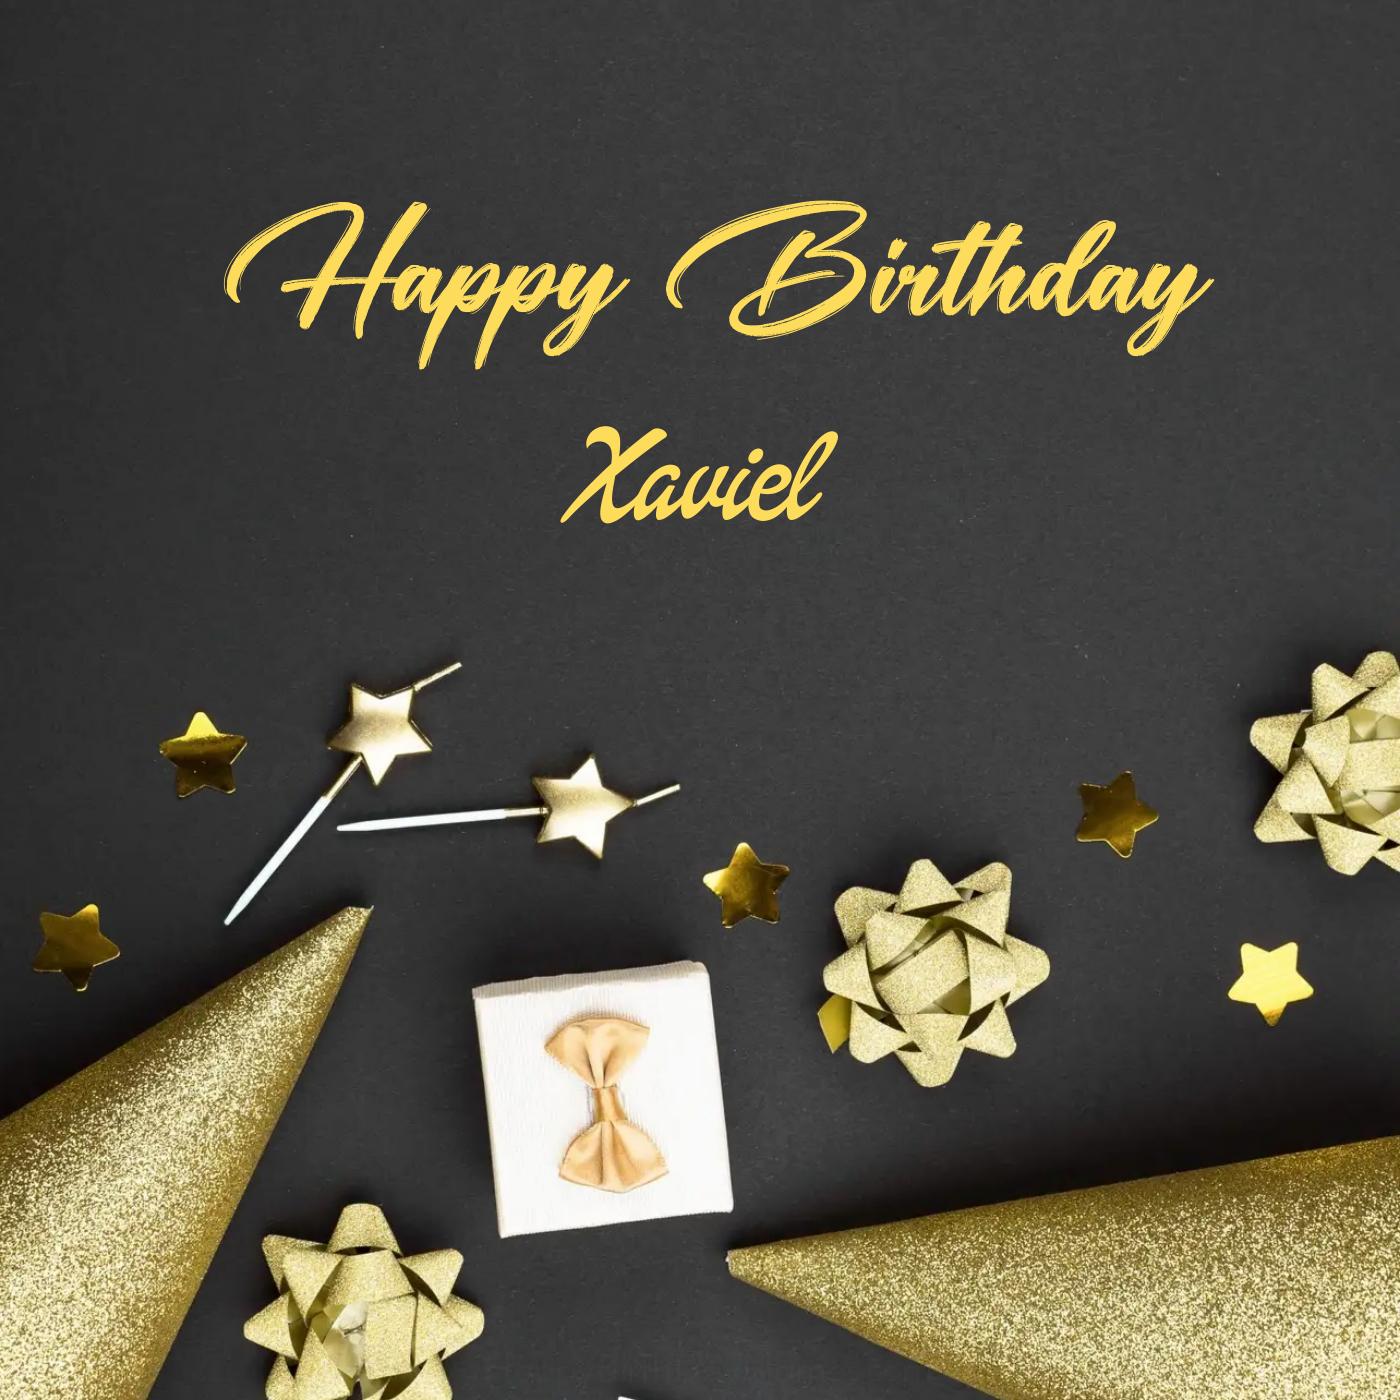 Happy Birthday Xaviel Golden Theme Card